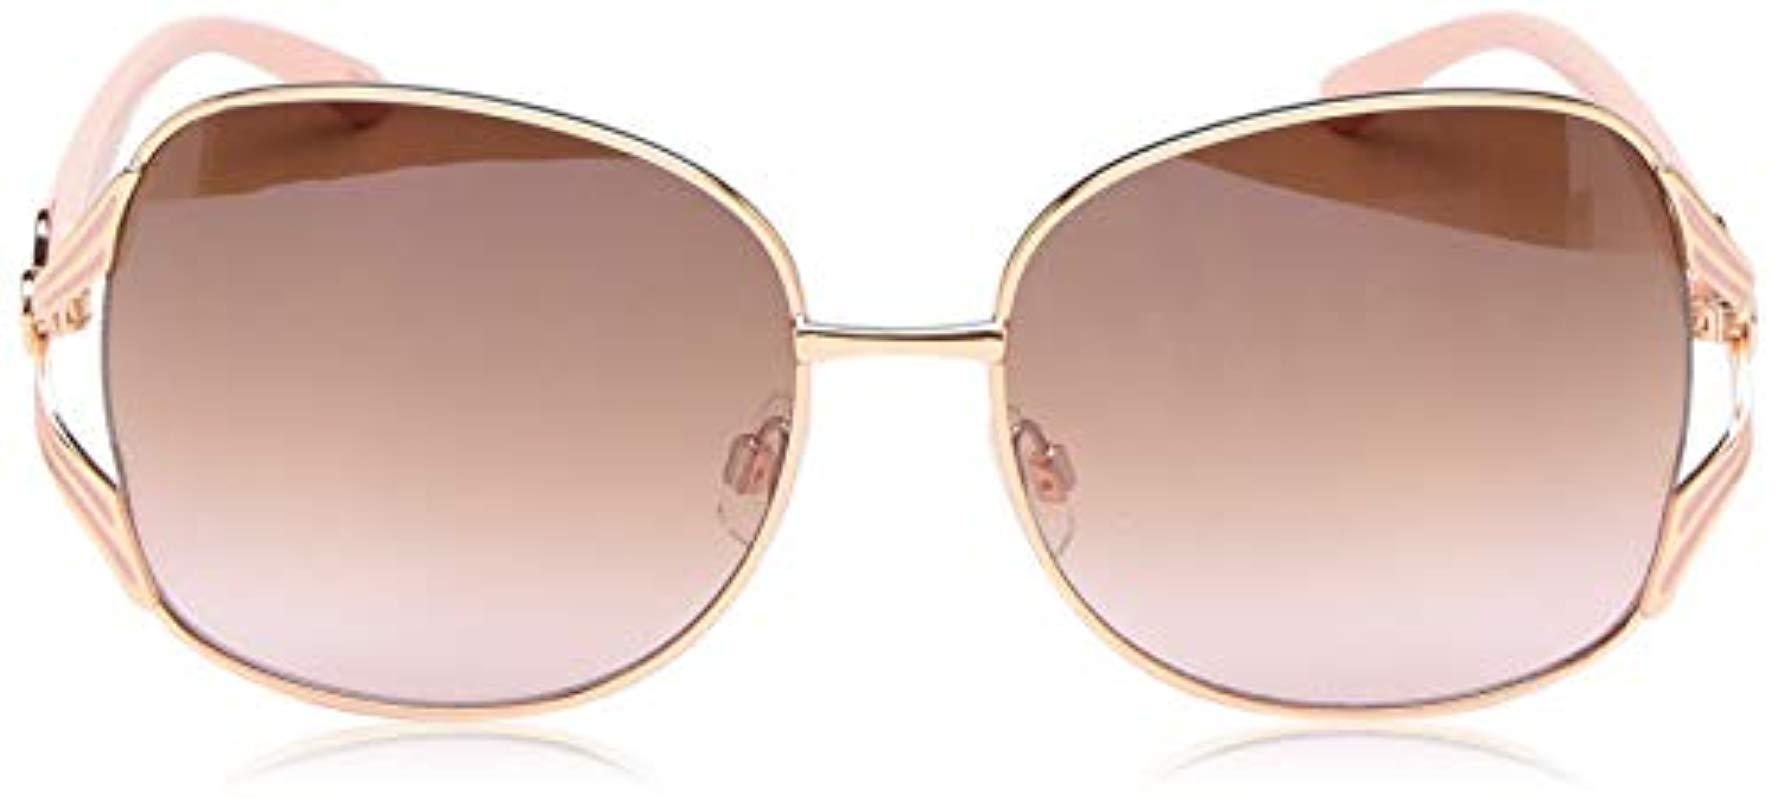 Jessica Simpson J5514 Rgdpk Non-polarized Iridium Round Sunglasses, Rose  Gold Pink, 60 Mm | Lyst